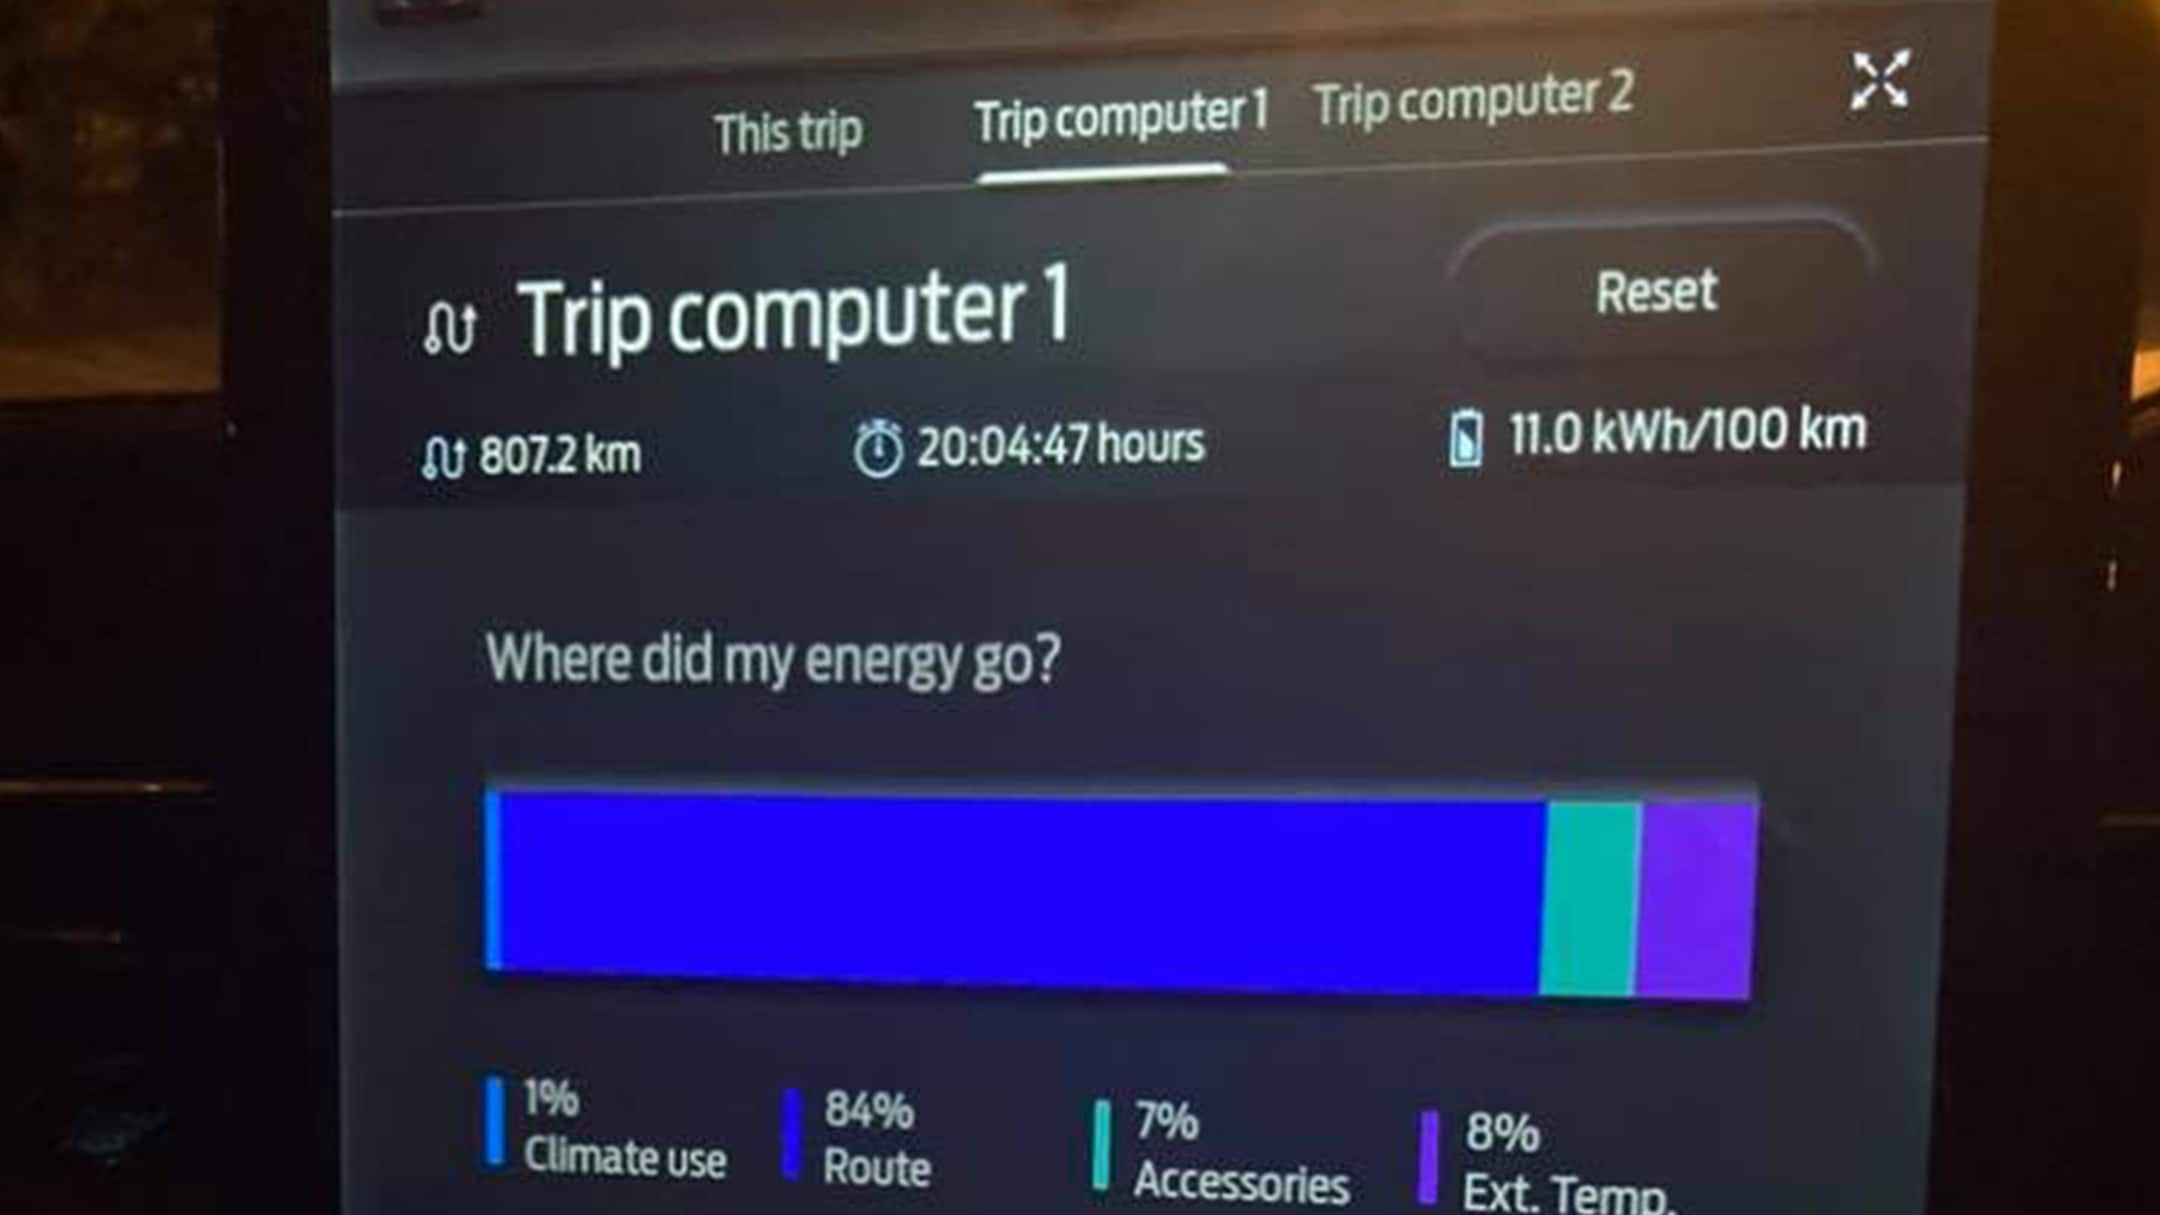 Trip computer